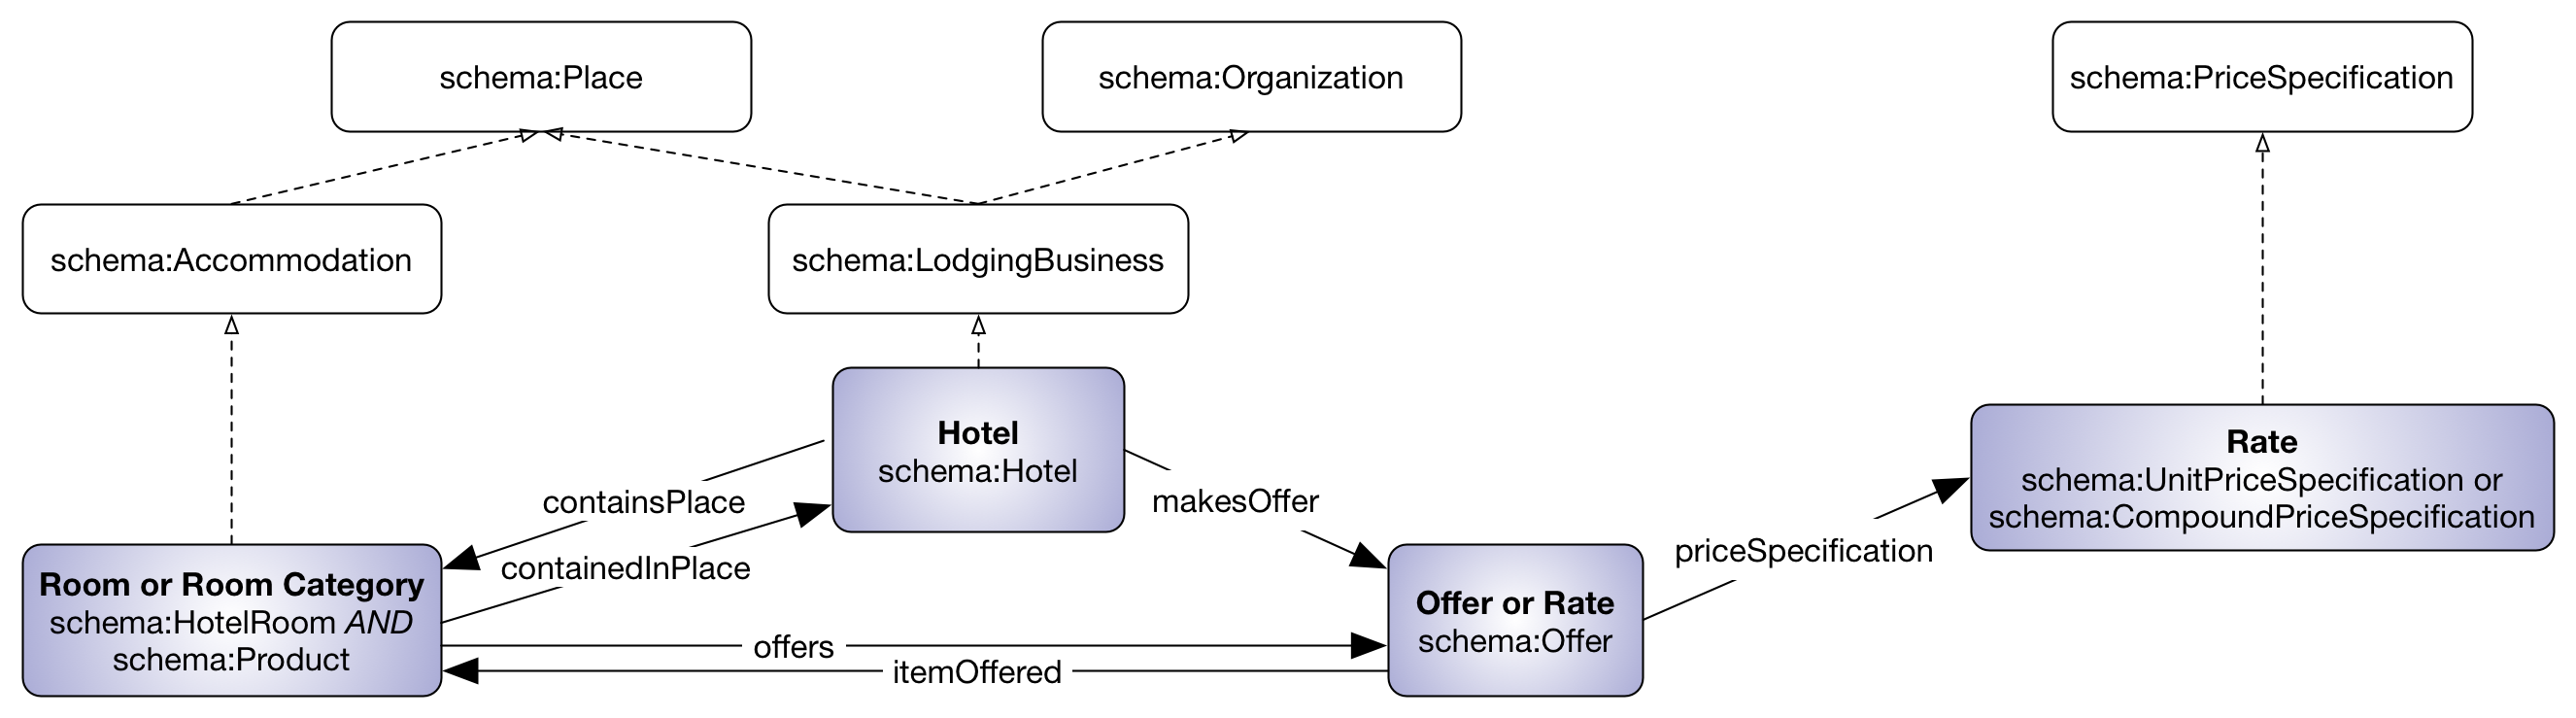 Schema.org pattern for describing hotel room offers